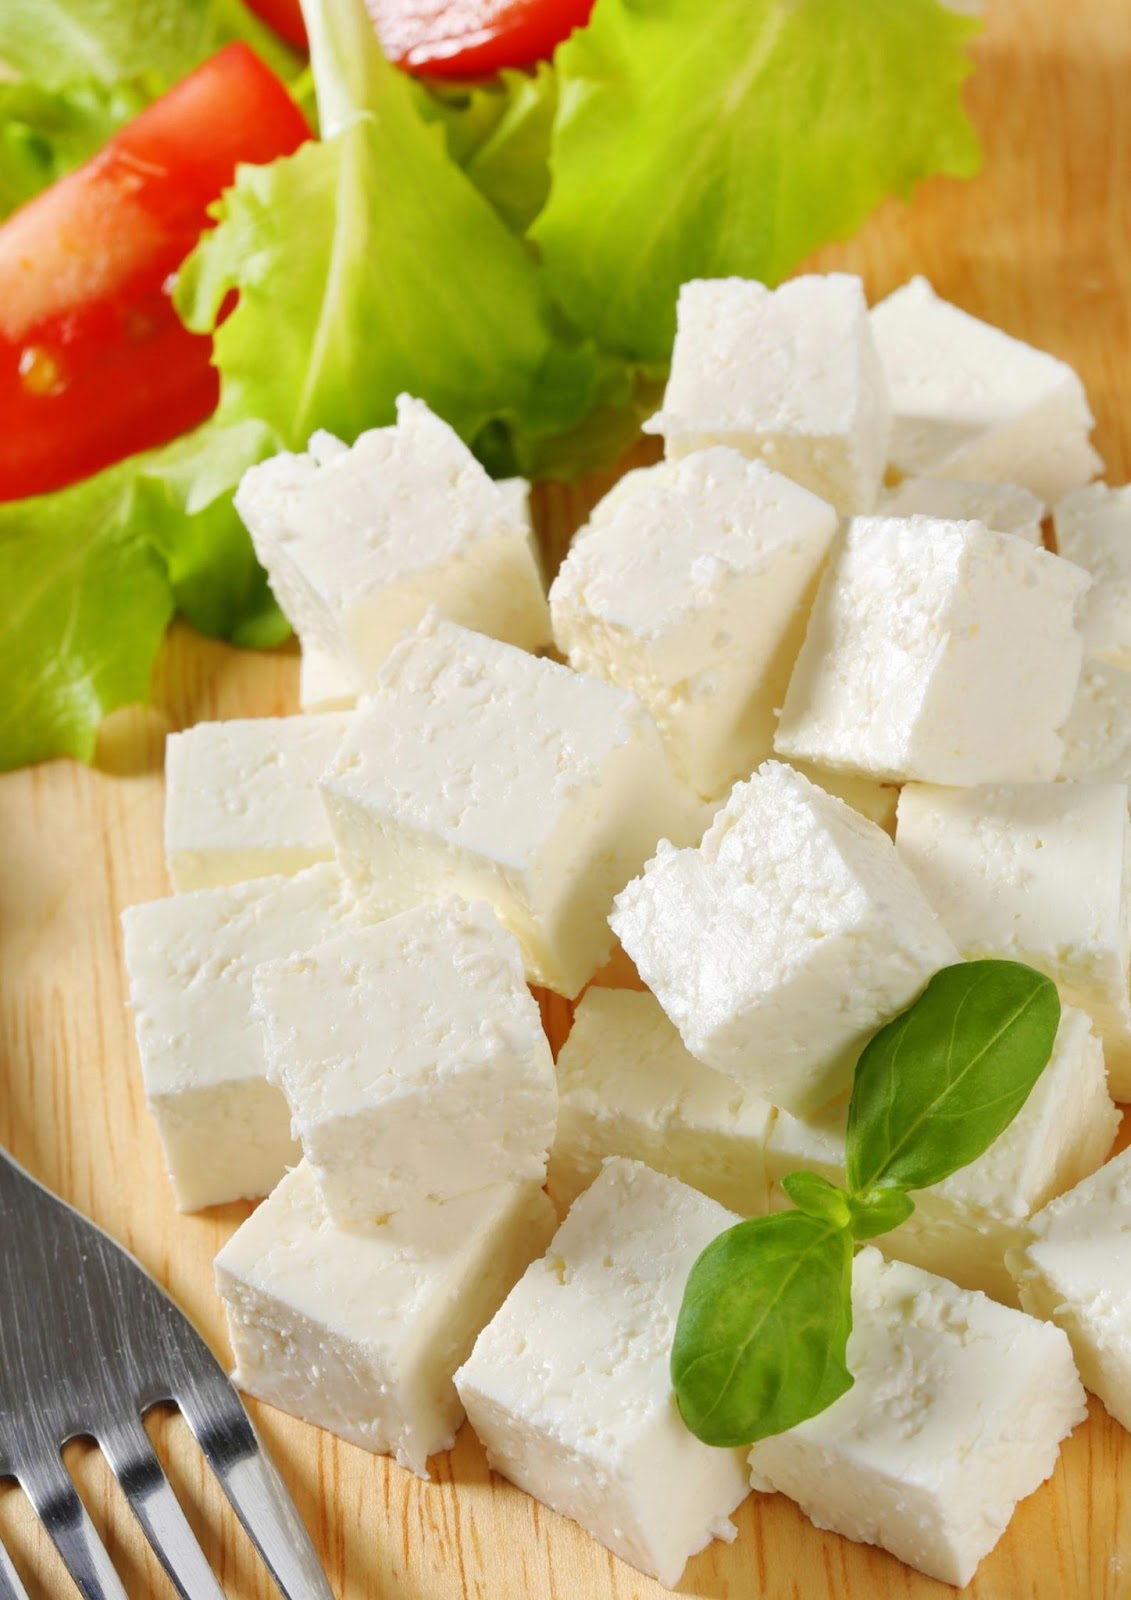 Feta Cheese - substitutes for burrata cheese